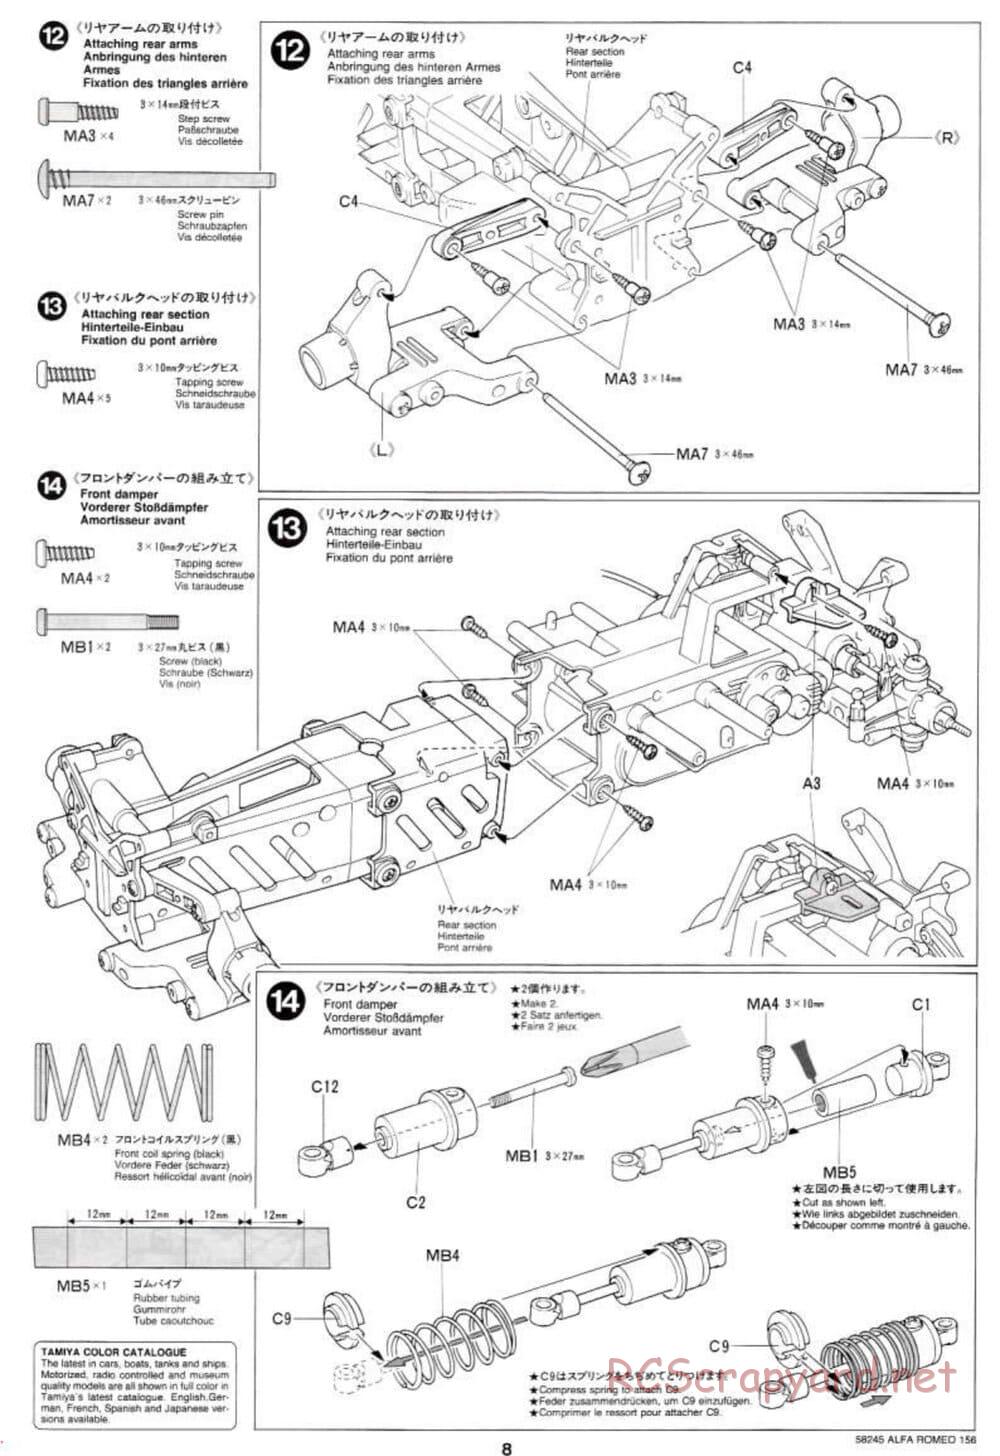 Tamiya - Alfa Romeo 156 Racing - FF-02 Chassis - Manual - Page 8